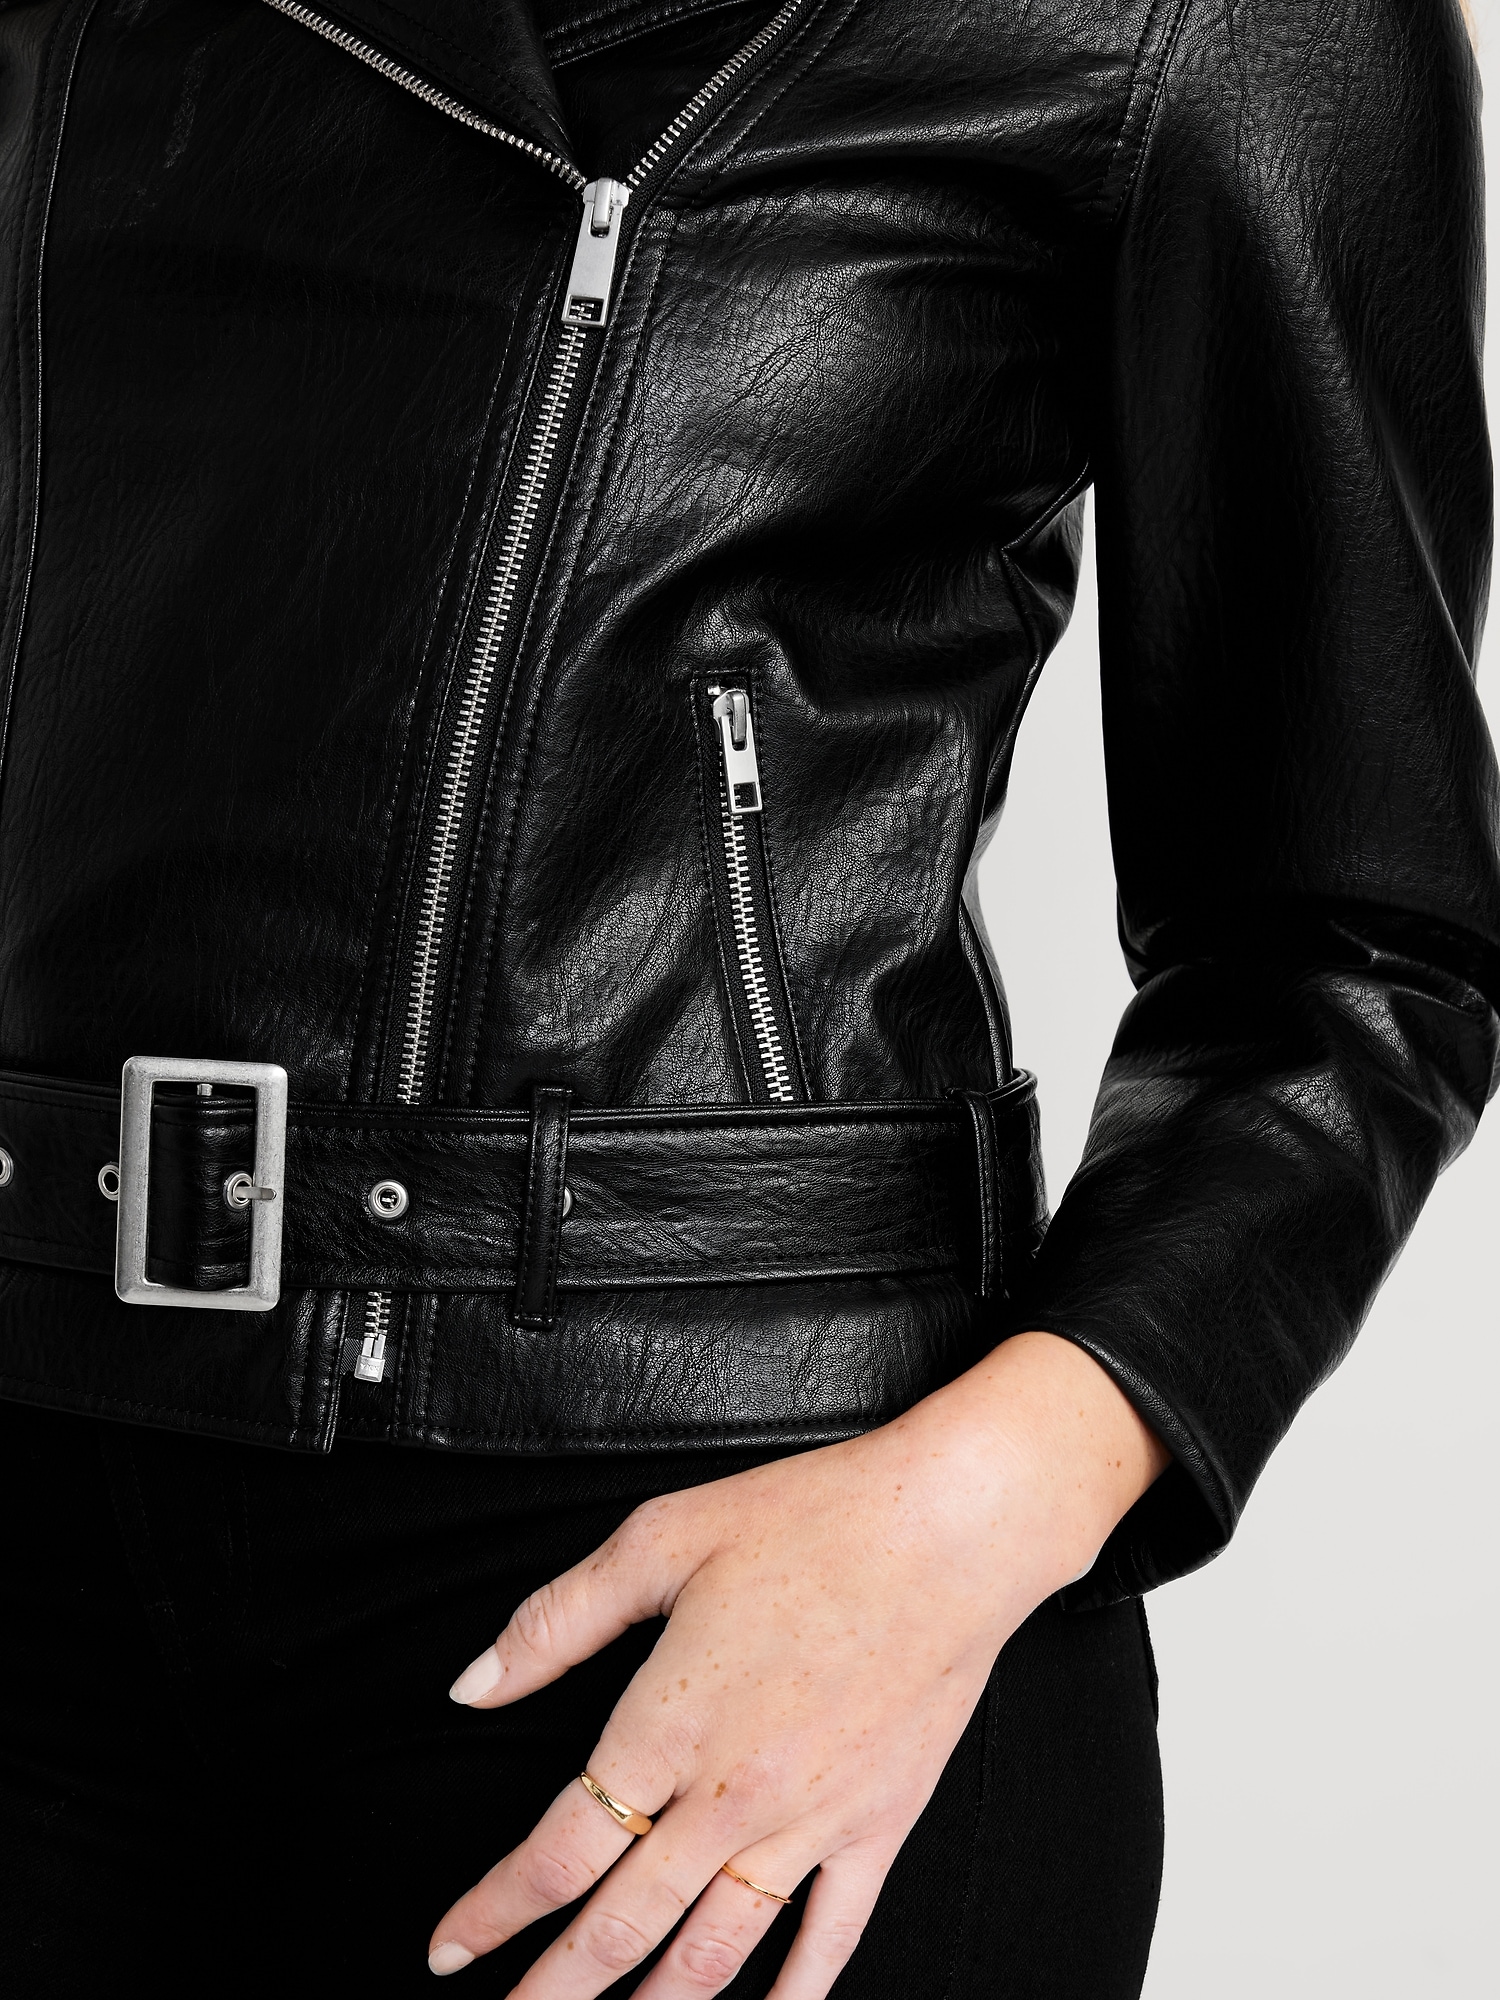 Faux-Leather Belted Biker Jacket for Women | Old Navy